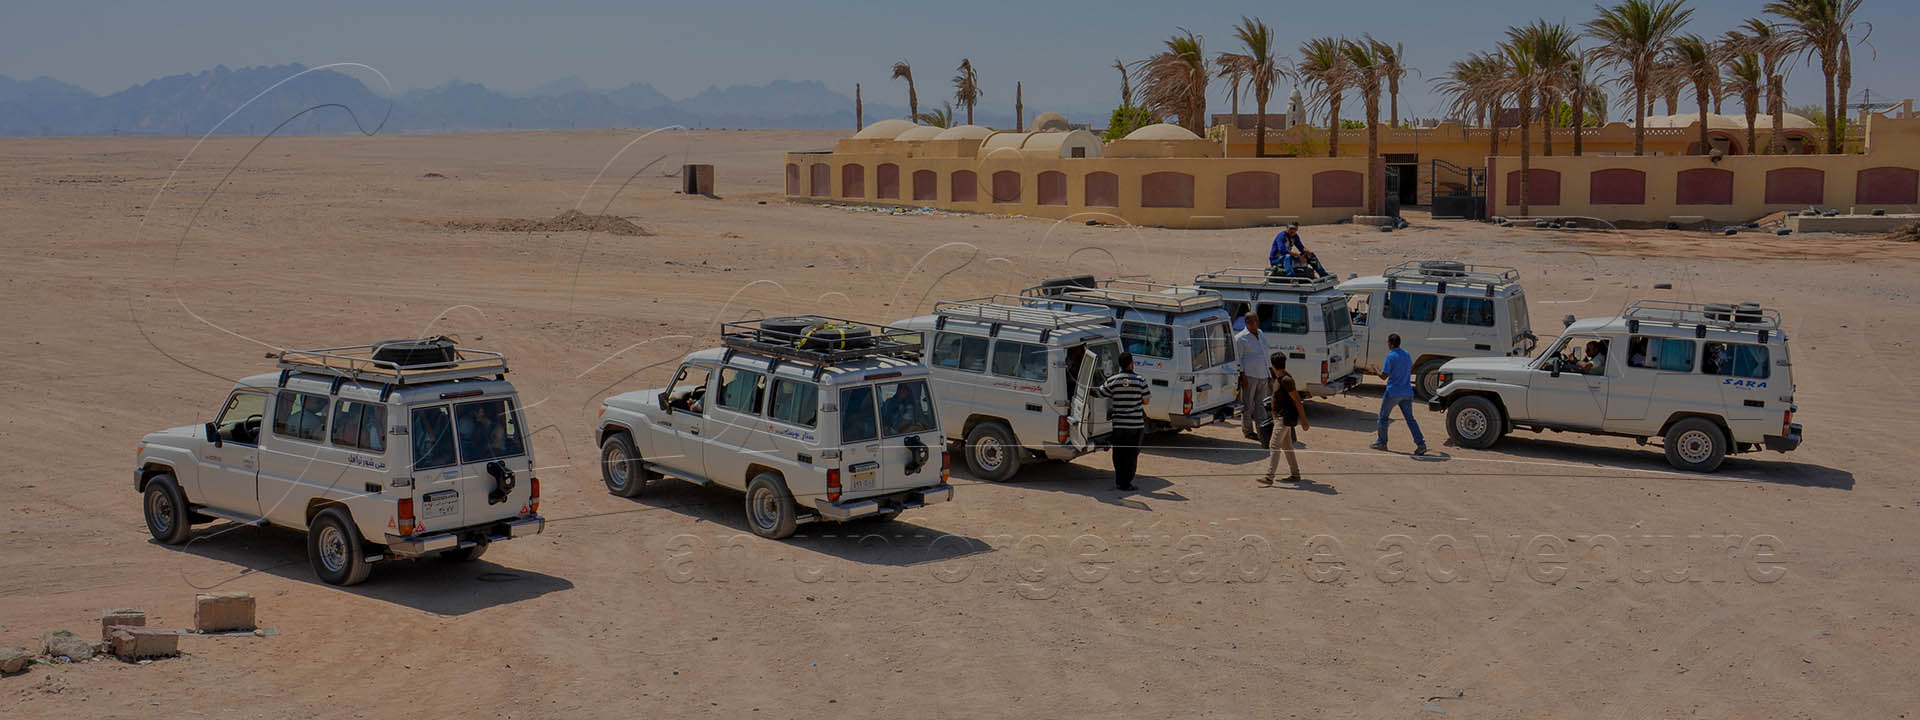 Джип-сафари по пустыне Эль-Гуна